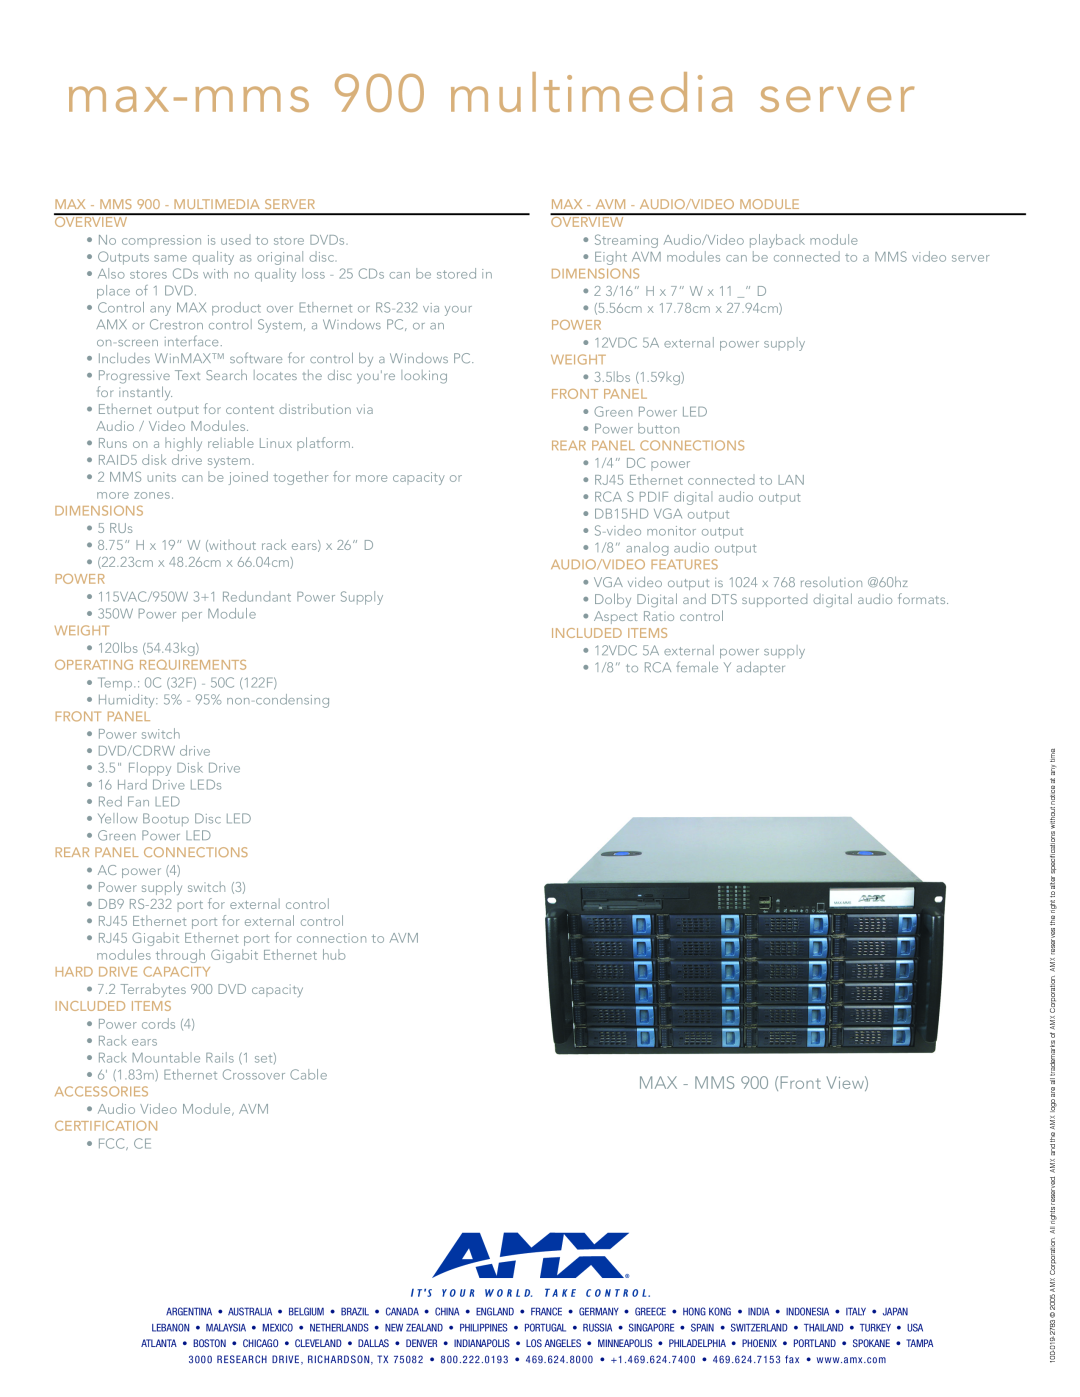 AMX max mss 900 manual max-mms 900 multimedia server, MAX - MMS 900 Front View 